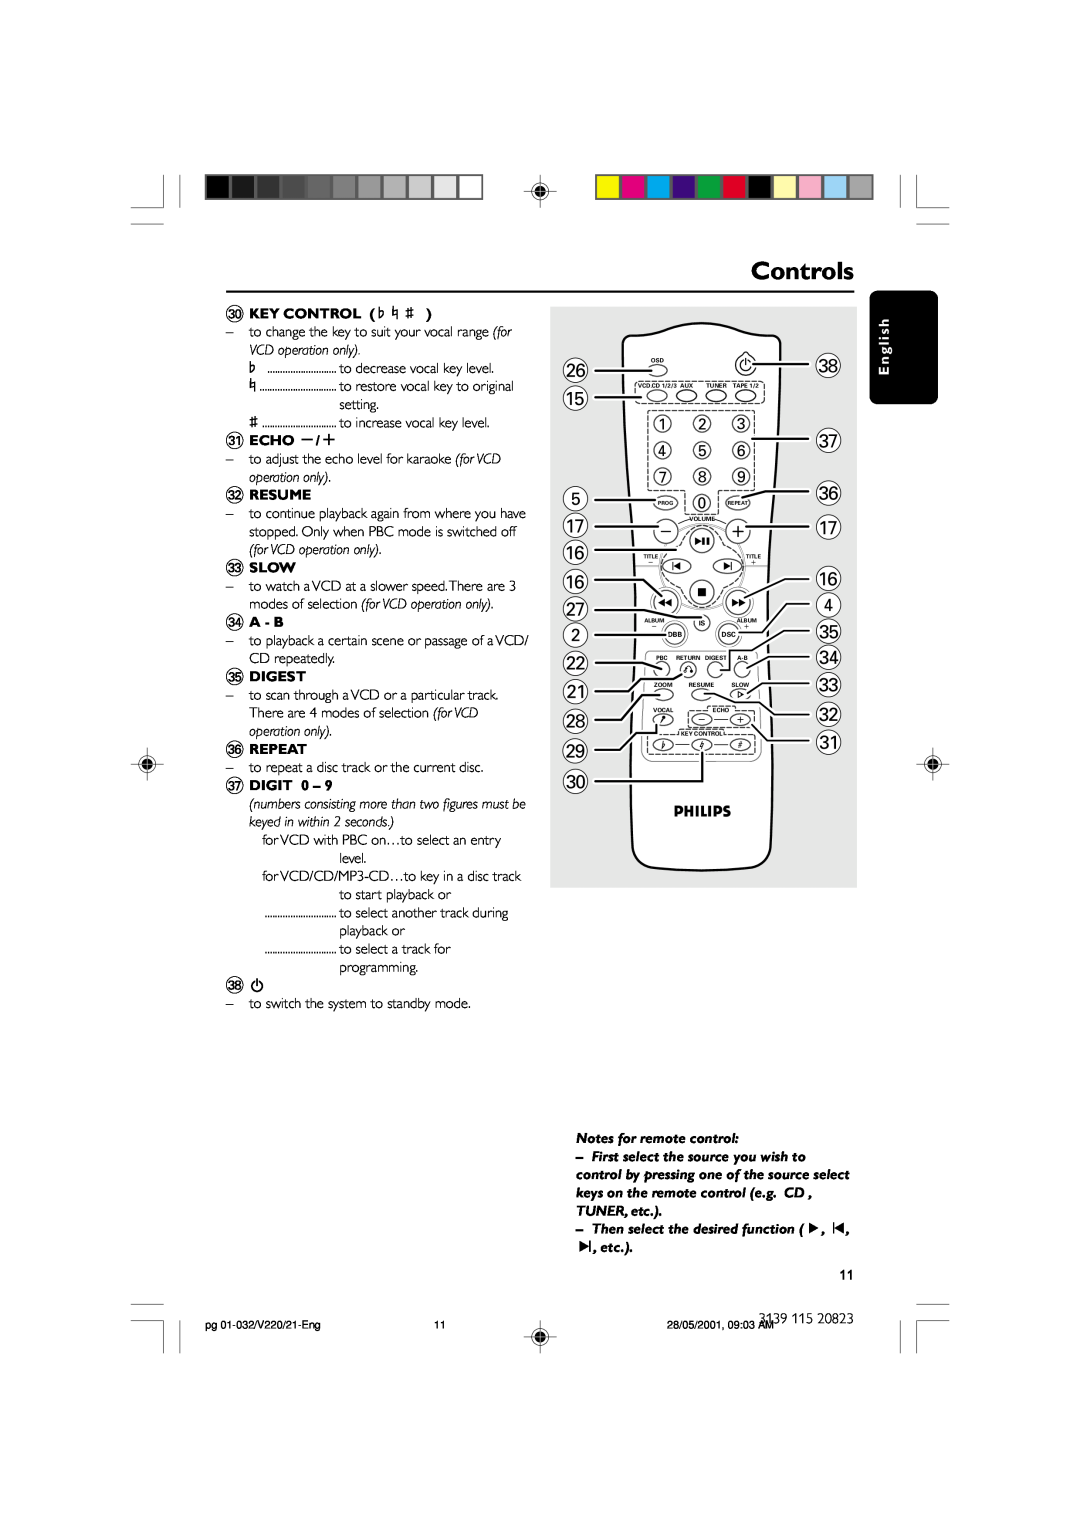 Philips FW-V220/21 manual 